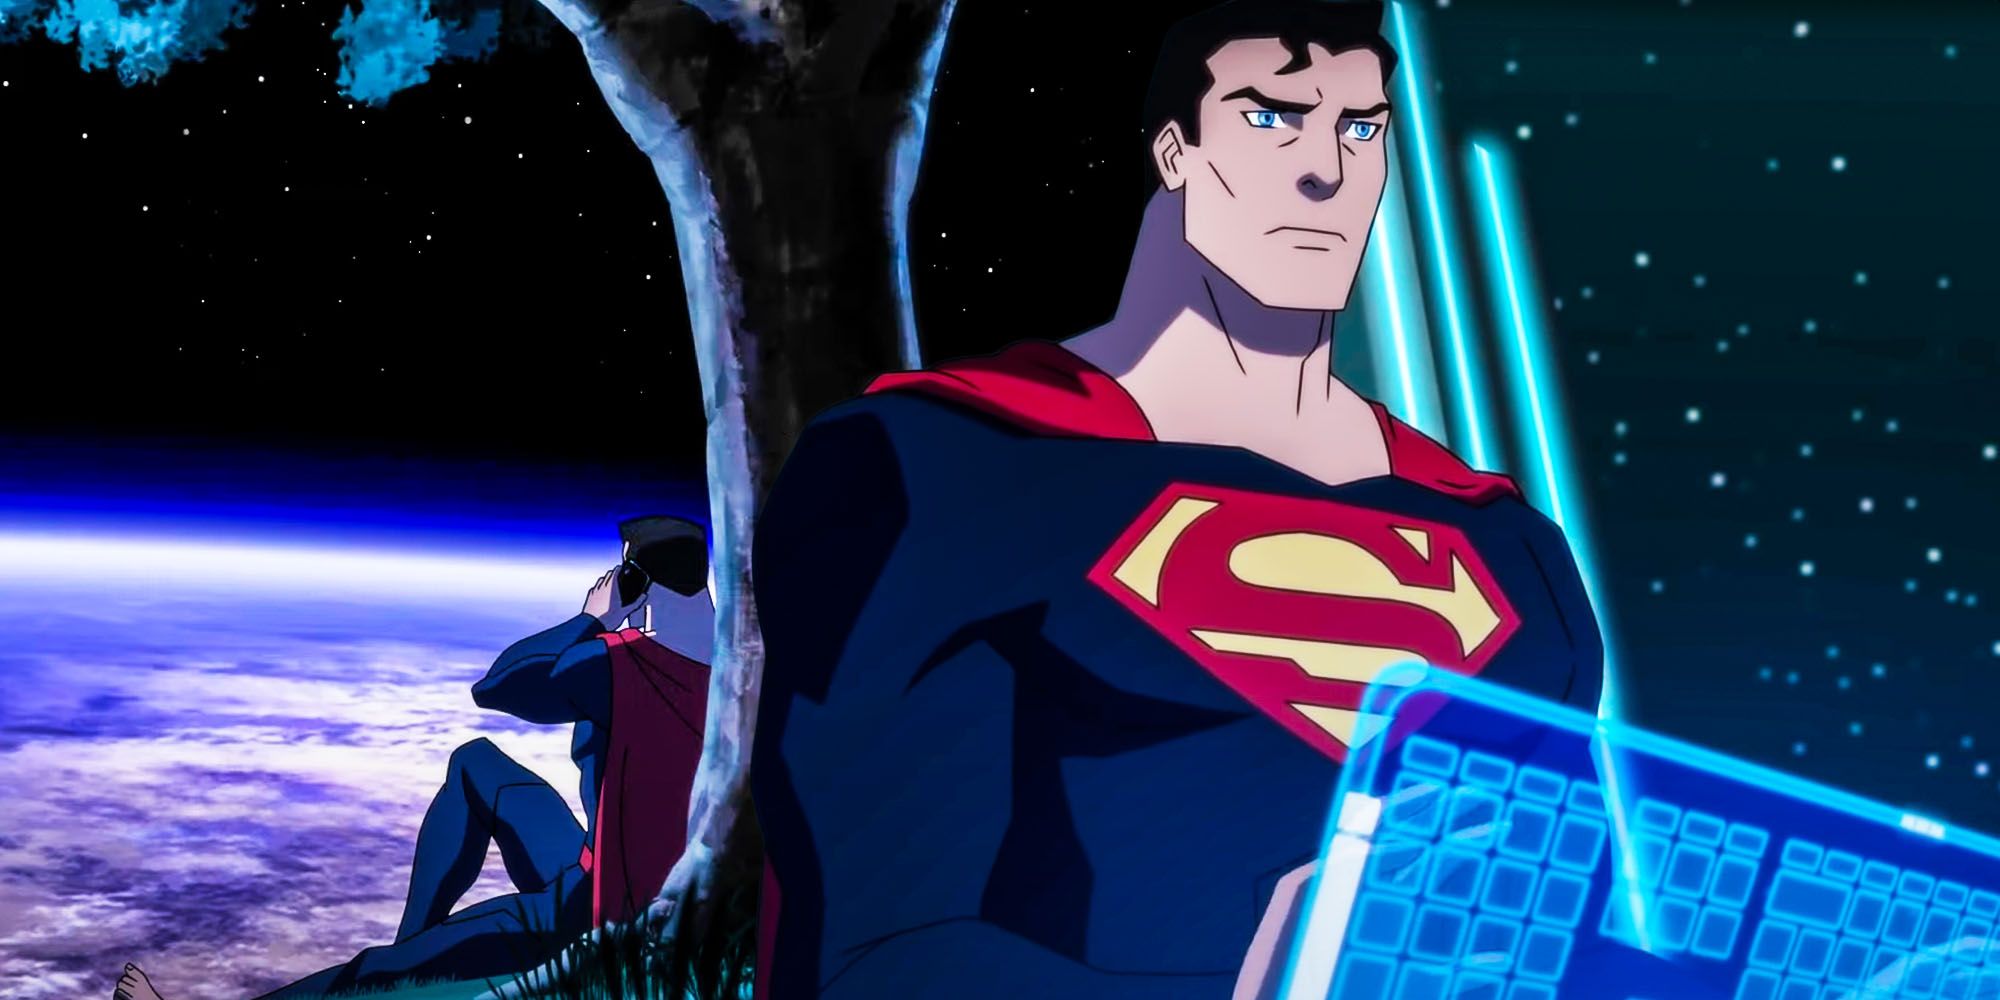 Young Justice phantoms Superman son jonathan powers